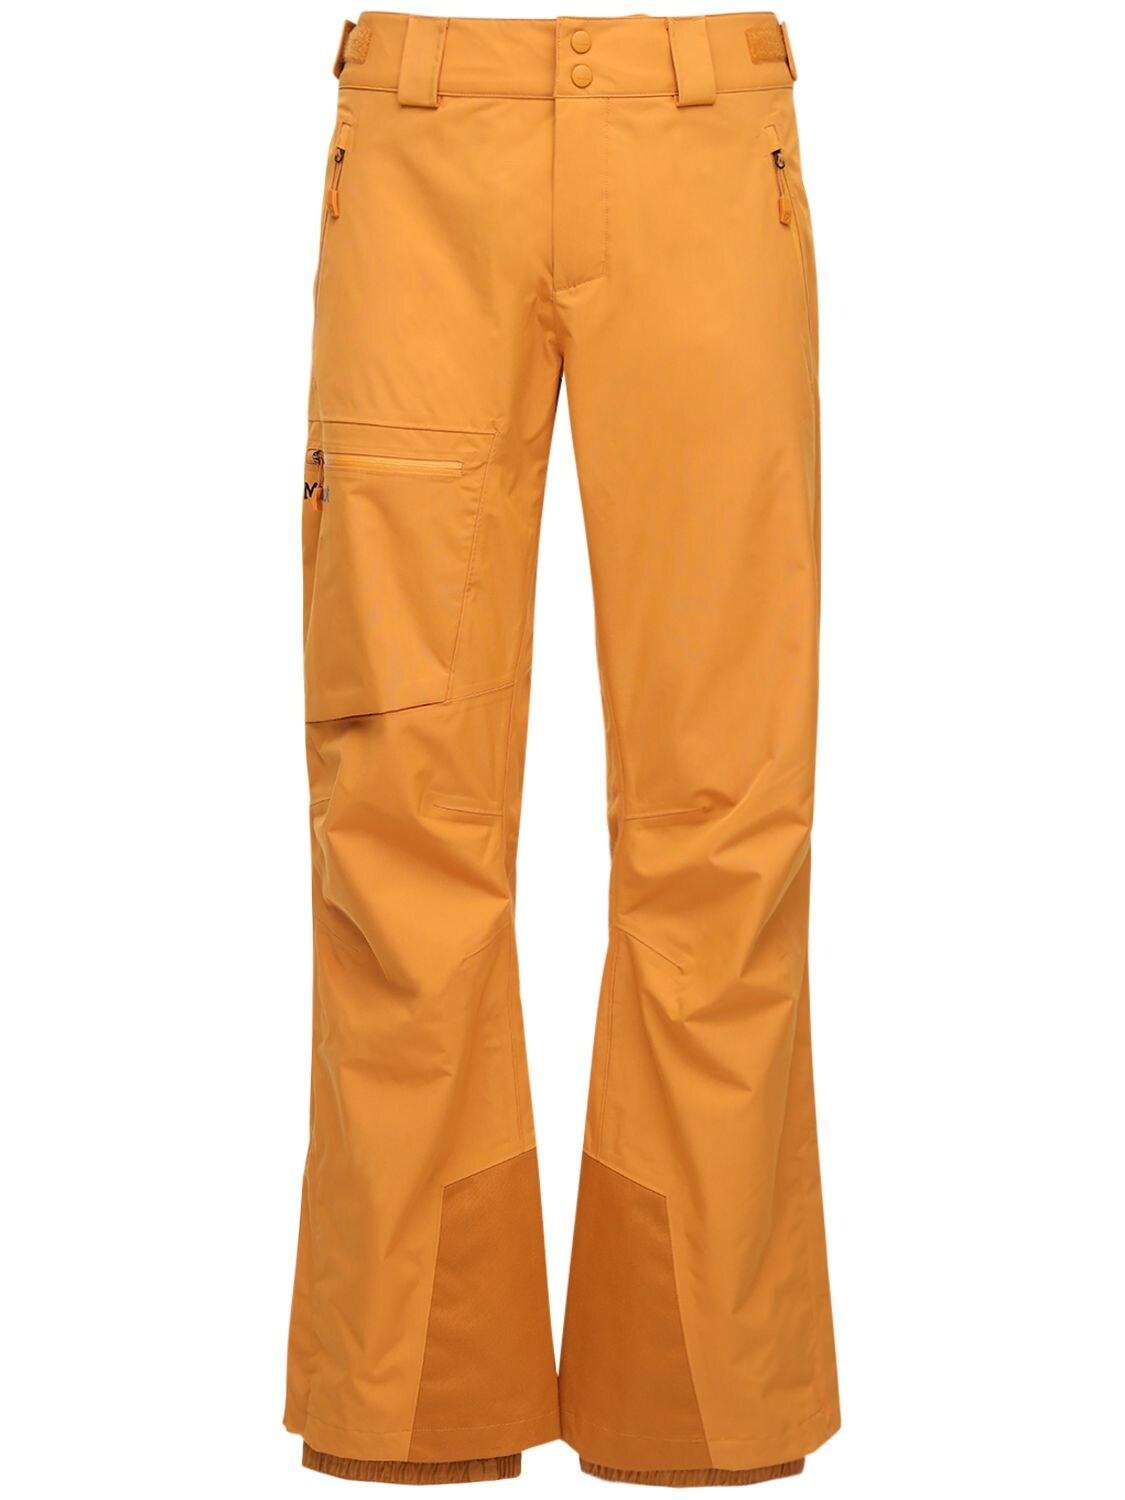 Marmot Refuge Ski Pants in Bronze (Orange) for Men - Lyst